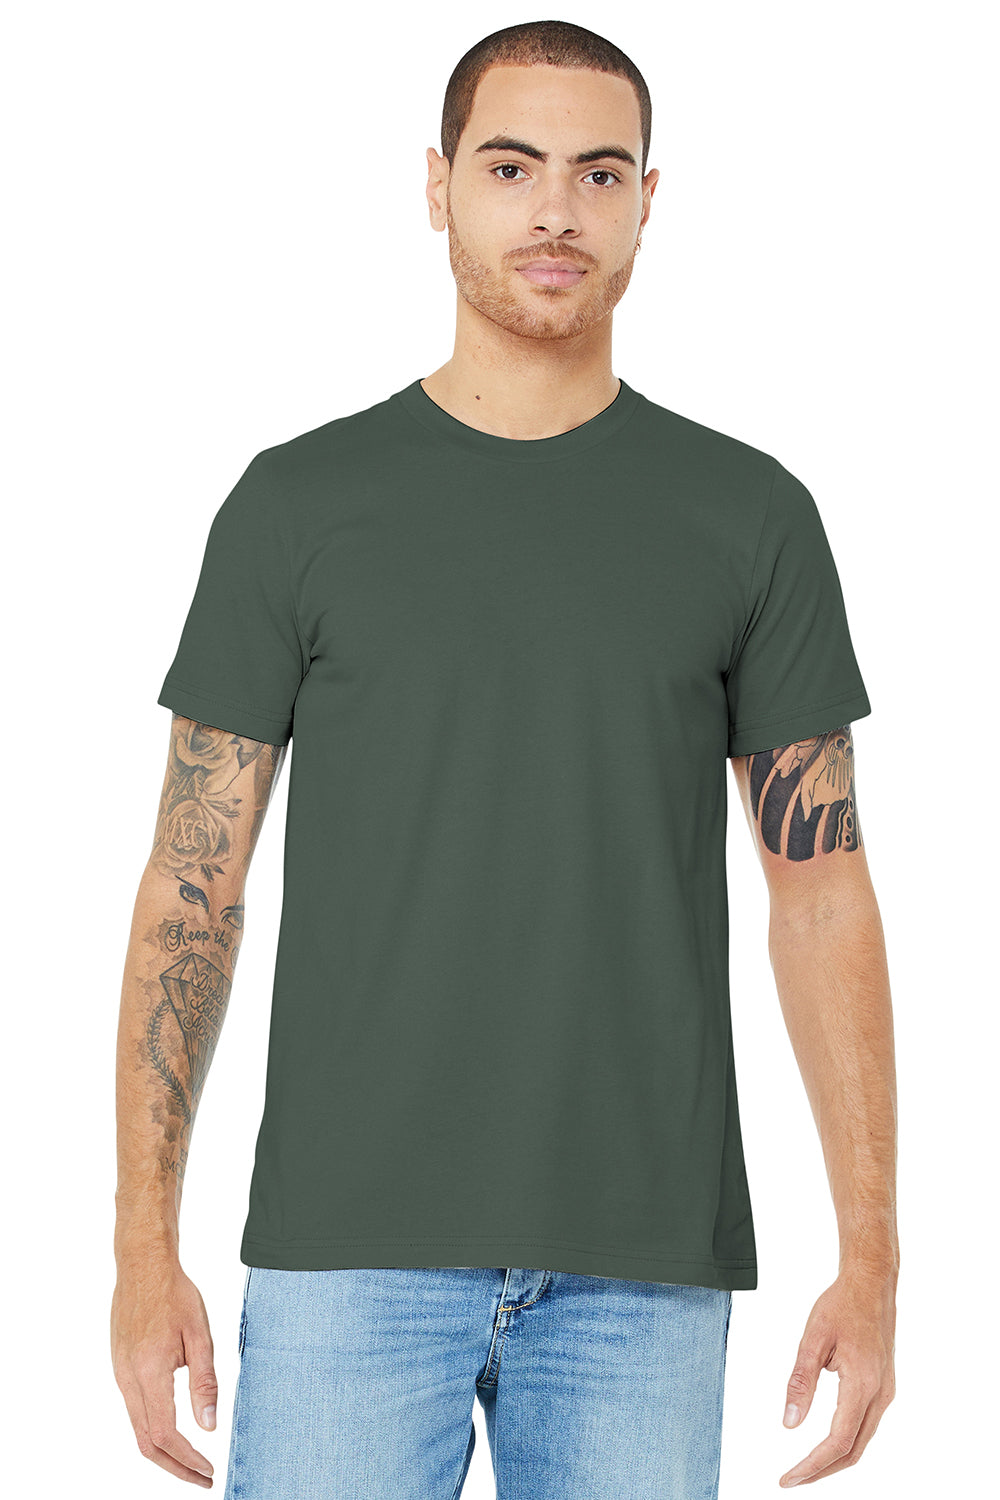 Bella + Canvas BC3001/3001C Mens Jersey Short Sleeve Crewneck T-Shirt Military Green Model Front